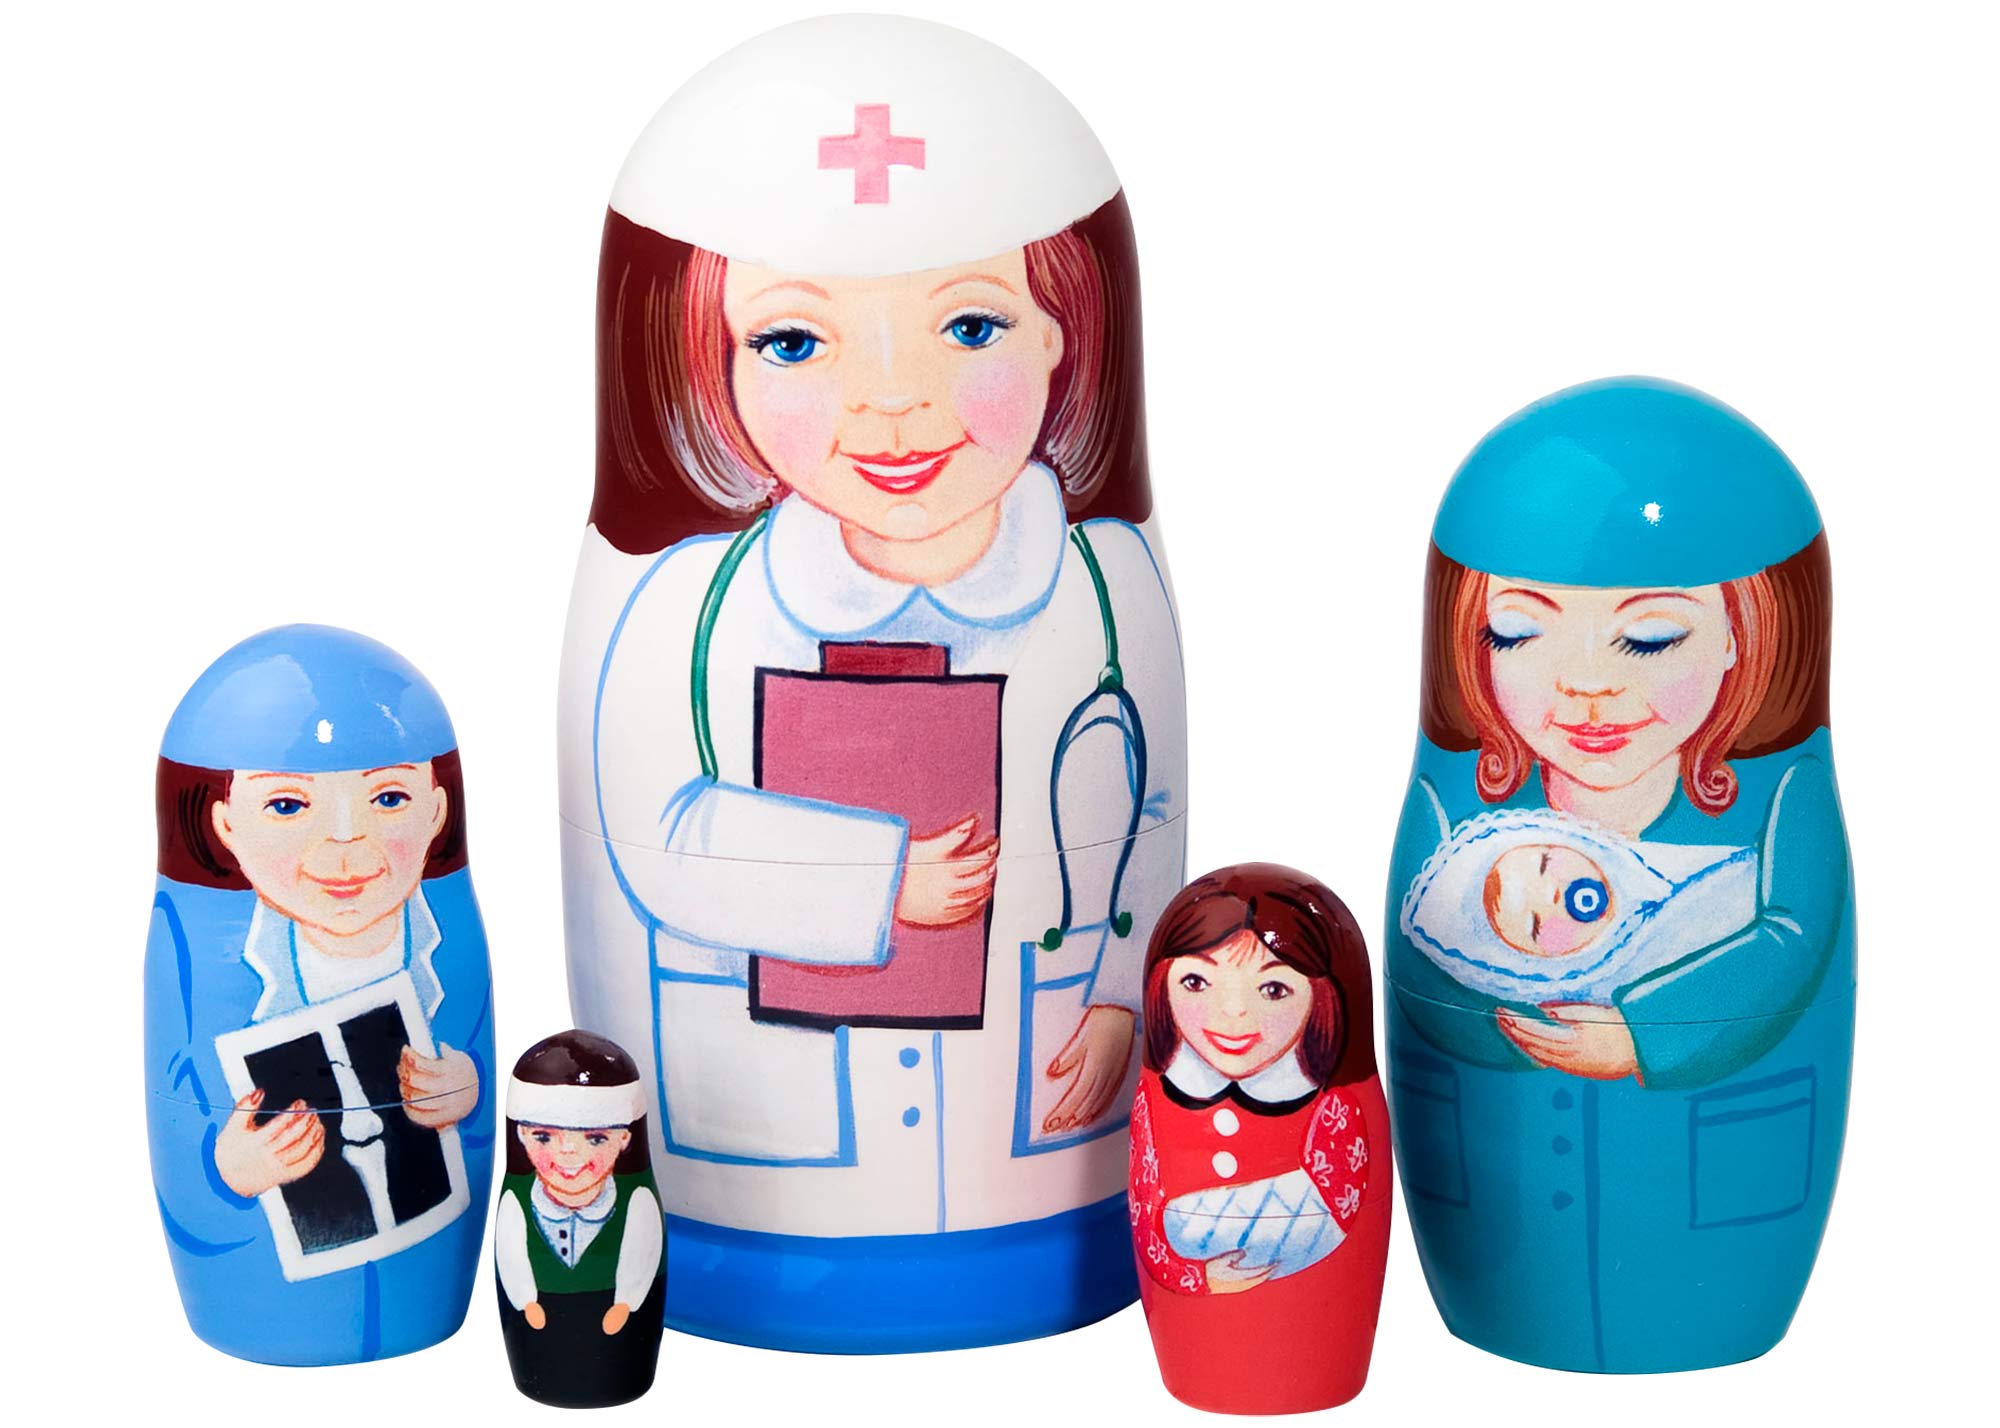 Buy Nurse Nesting Doll 5 pc./5" at GoldenCockerel.com